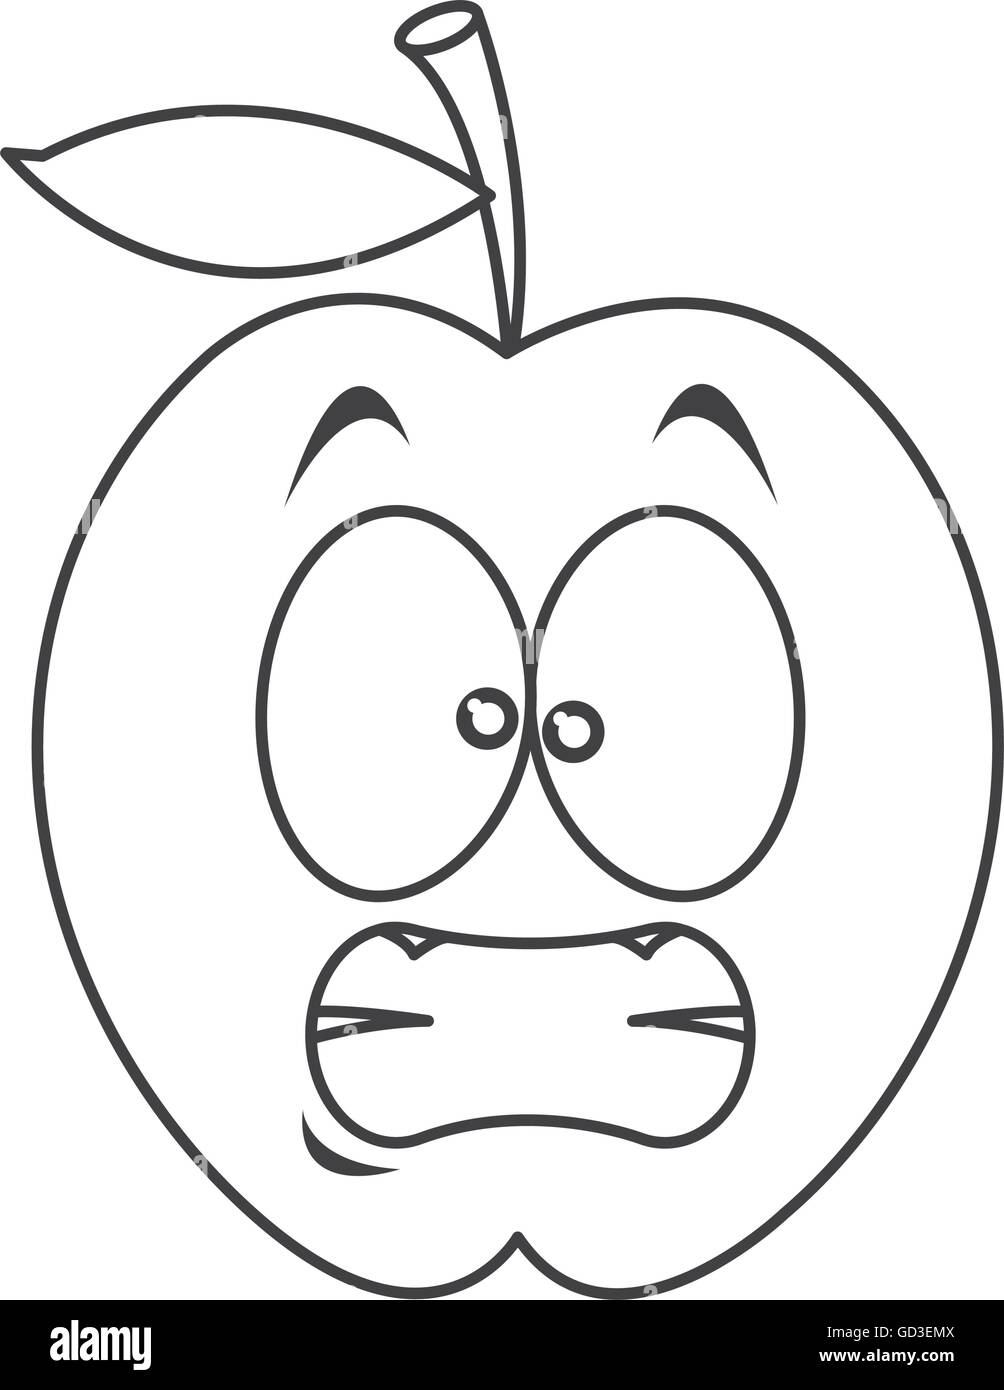 stressed apple cartoon icon Stock Vector